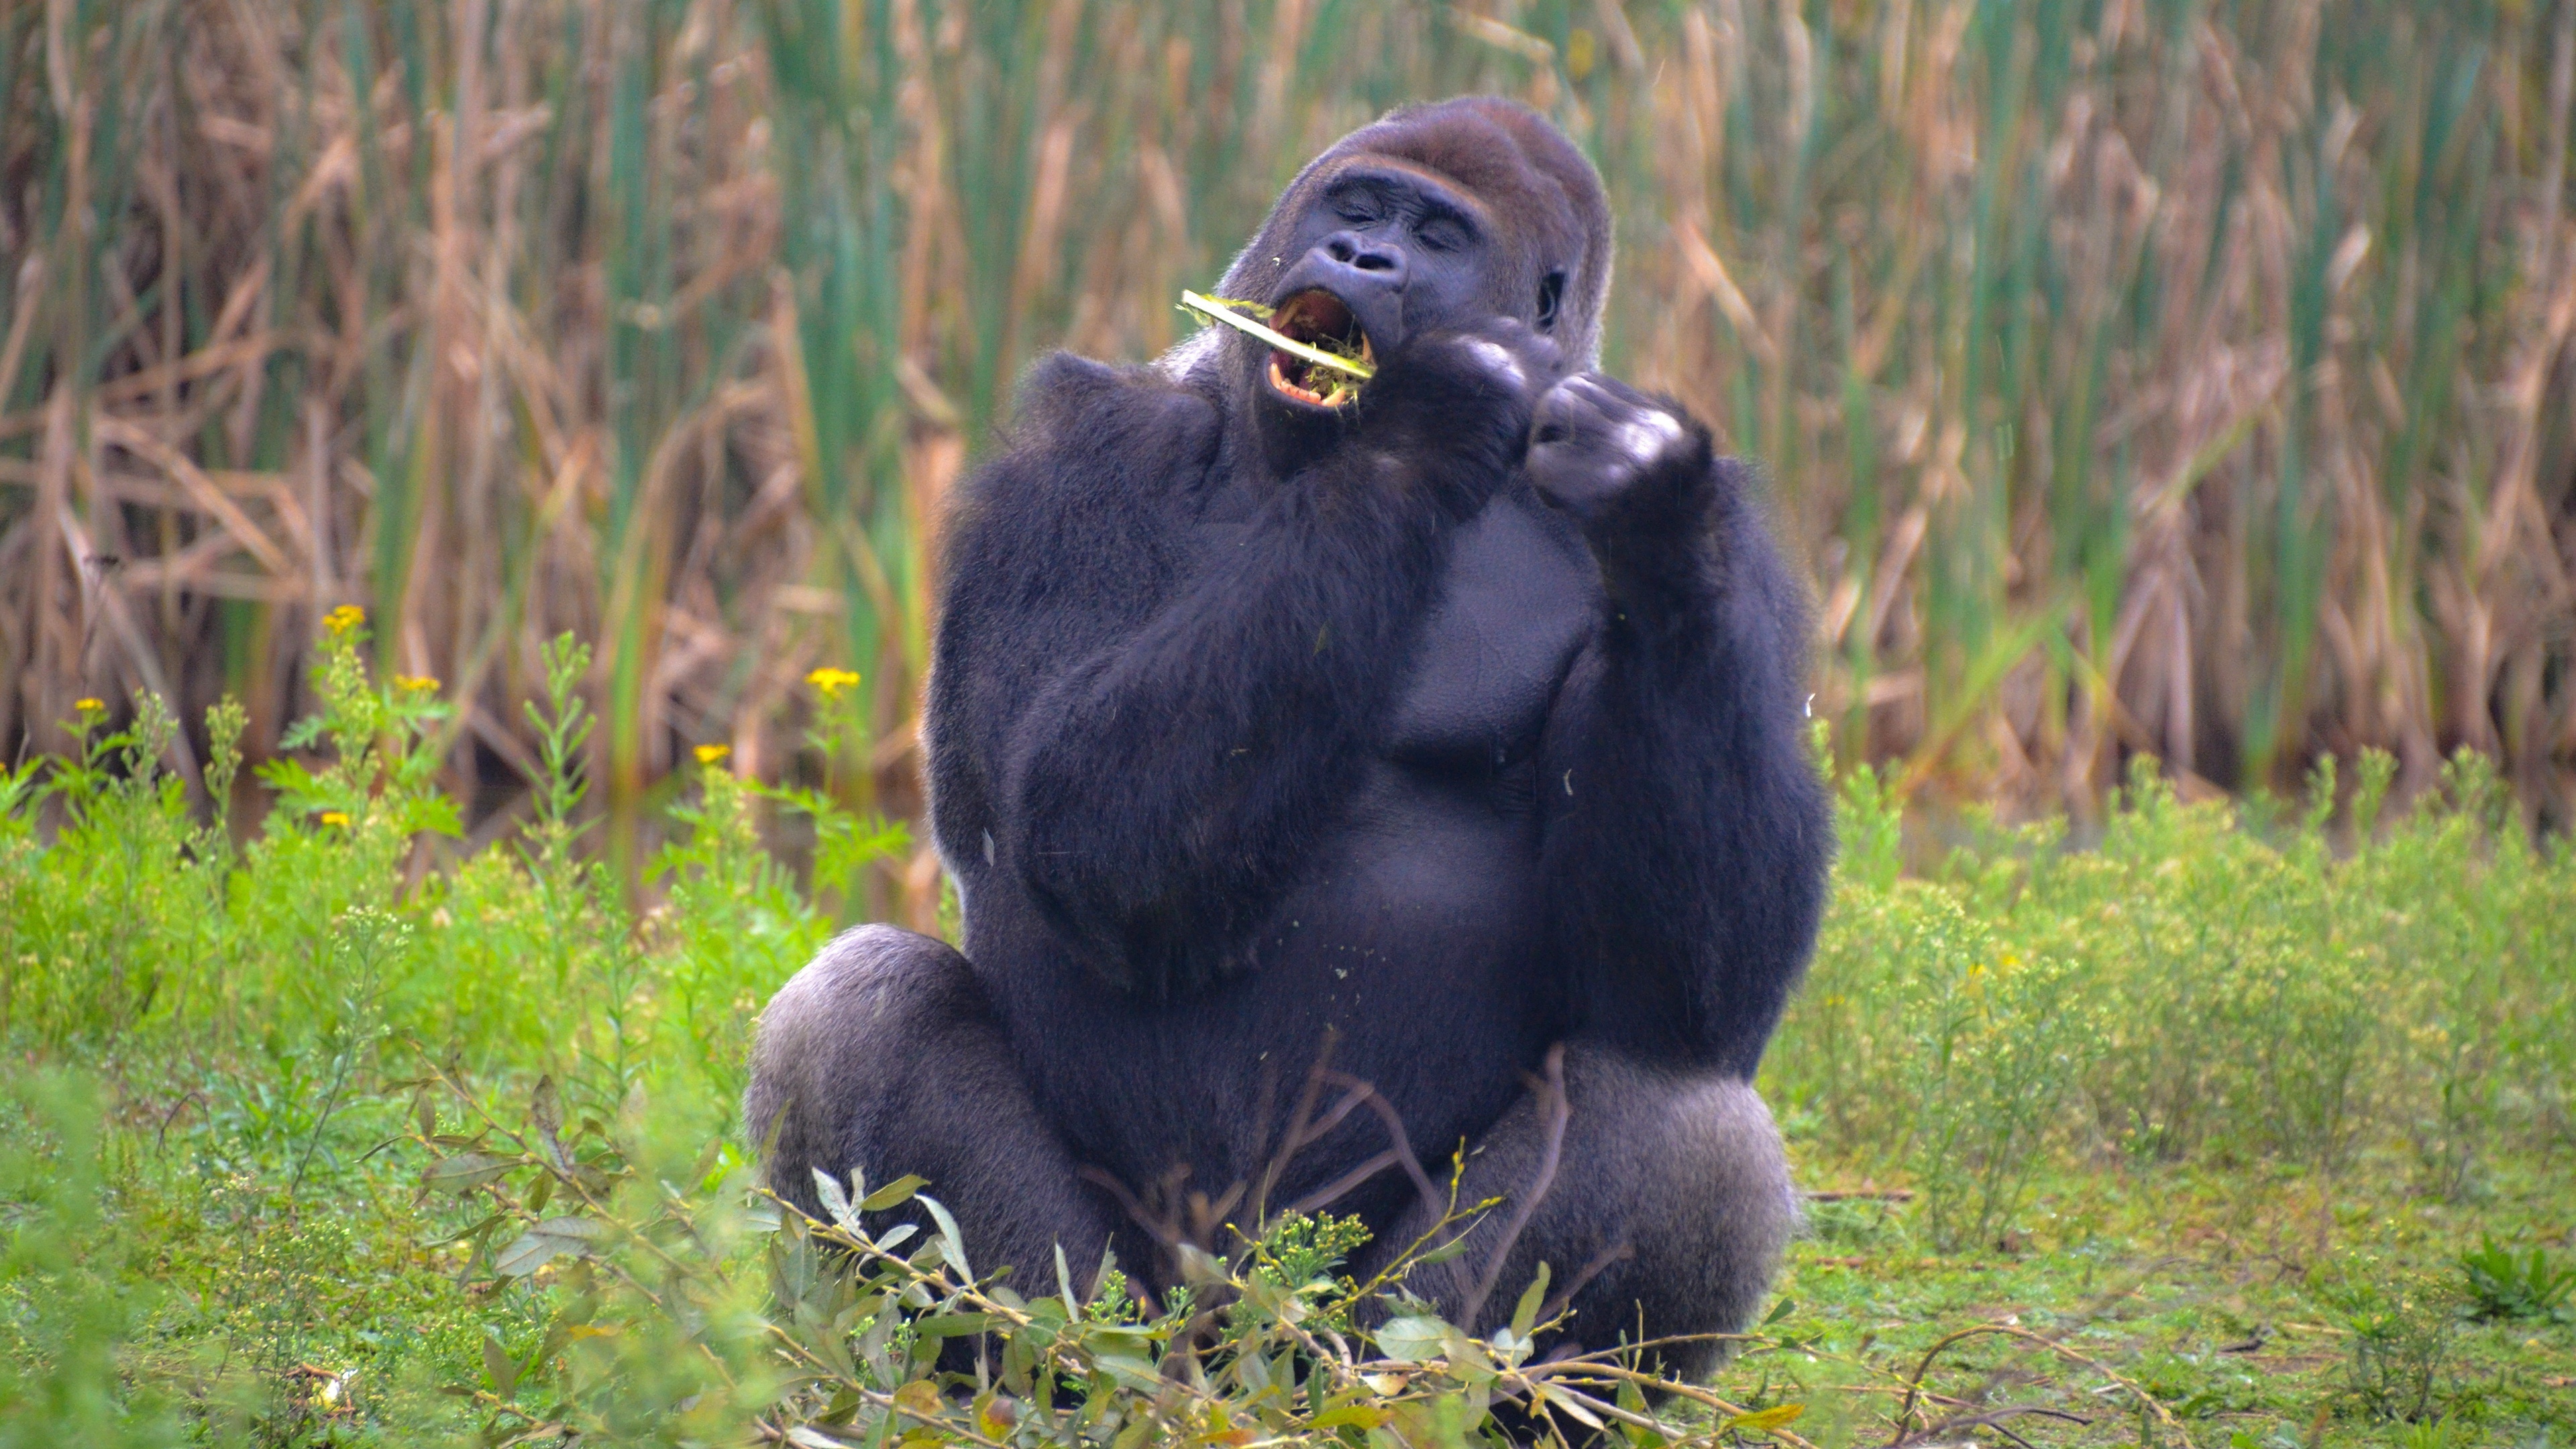 Gorilla in Africa, Incredible wildlife photo, Animal photography, Nature's beauty, 3840x2160 4K Desktop